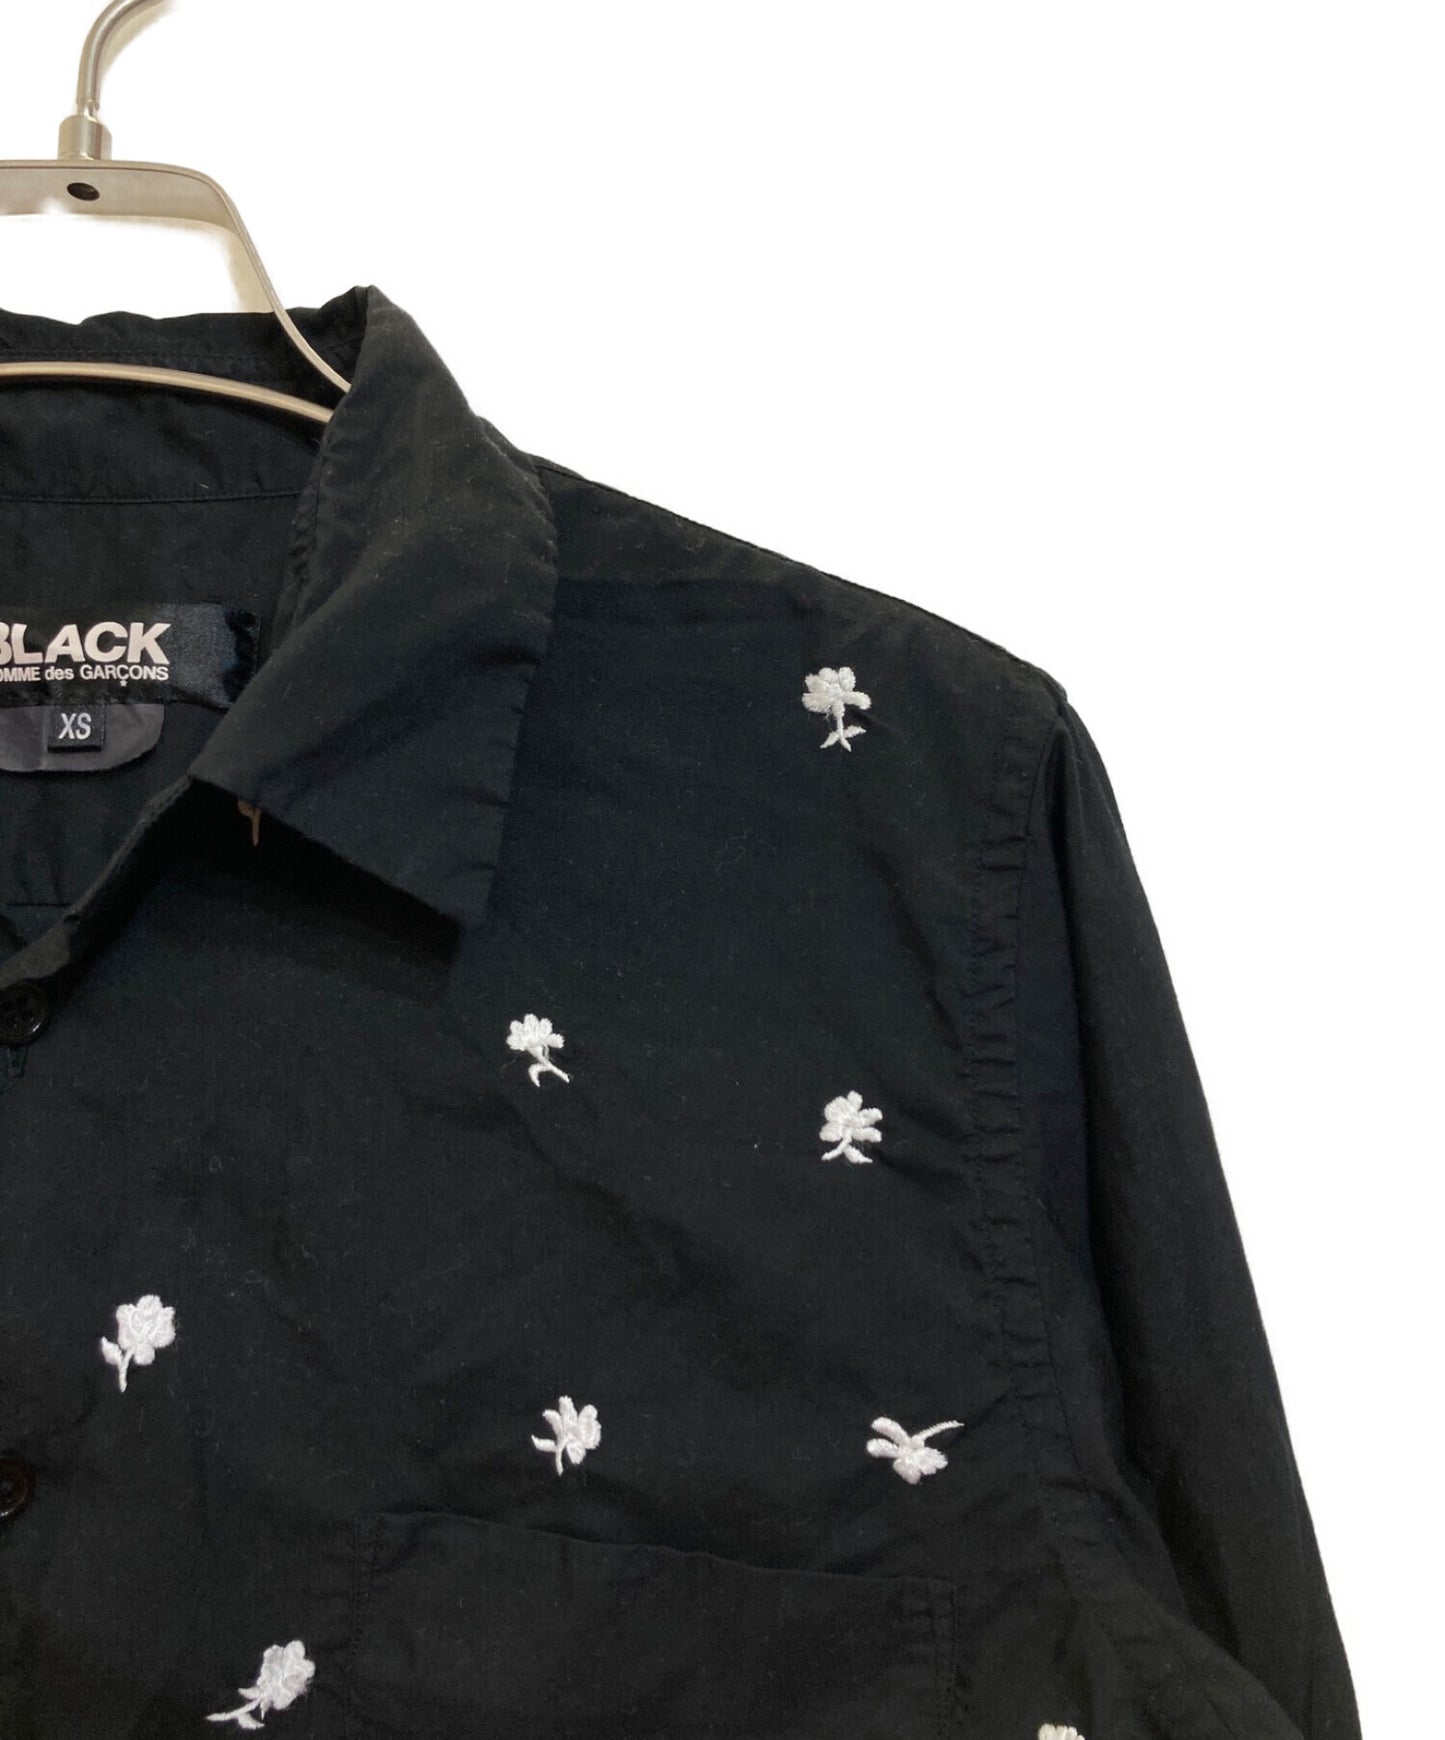 Black Comme des Garcons เสื้อเชิ้ตลายดอกไม้ 1M-B001